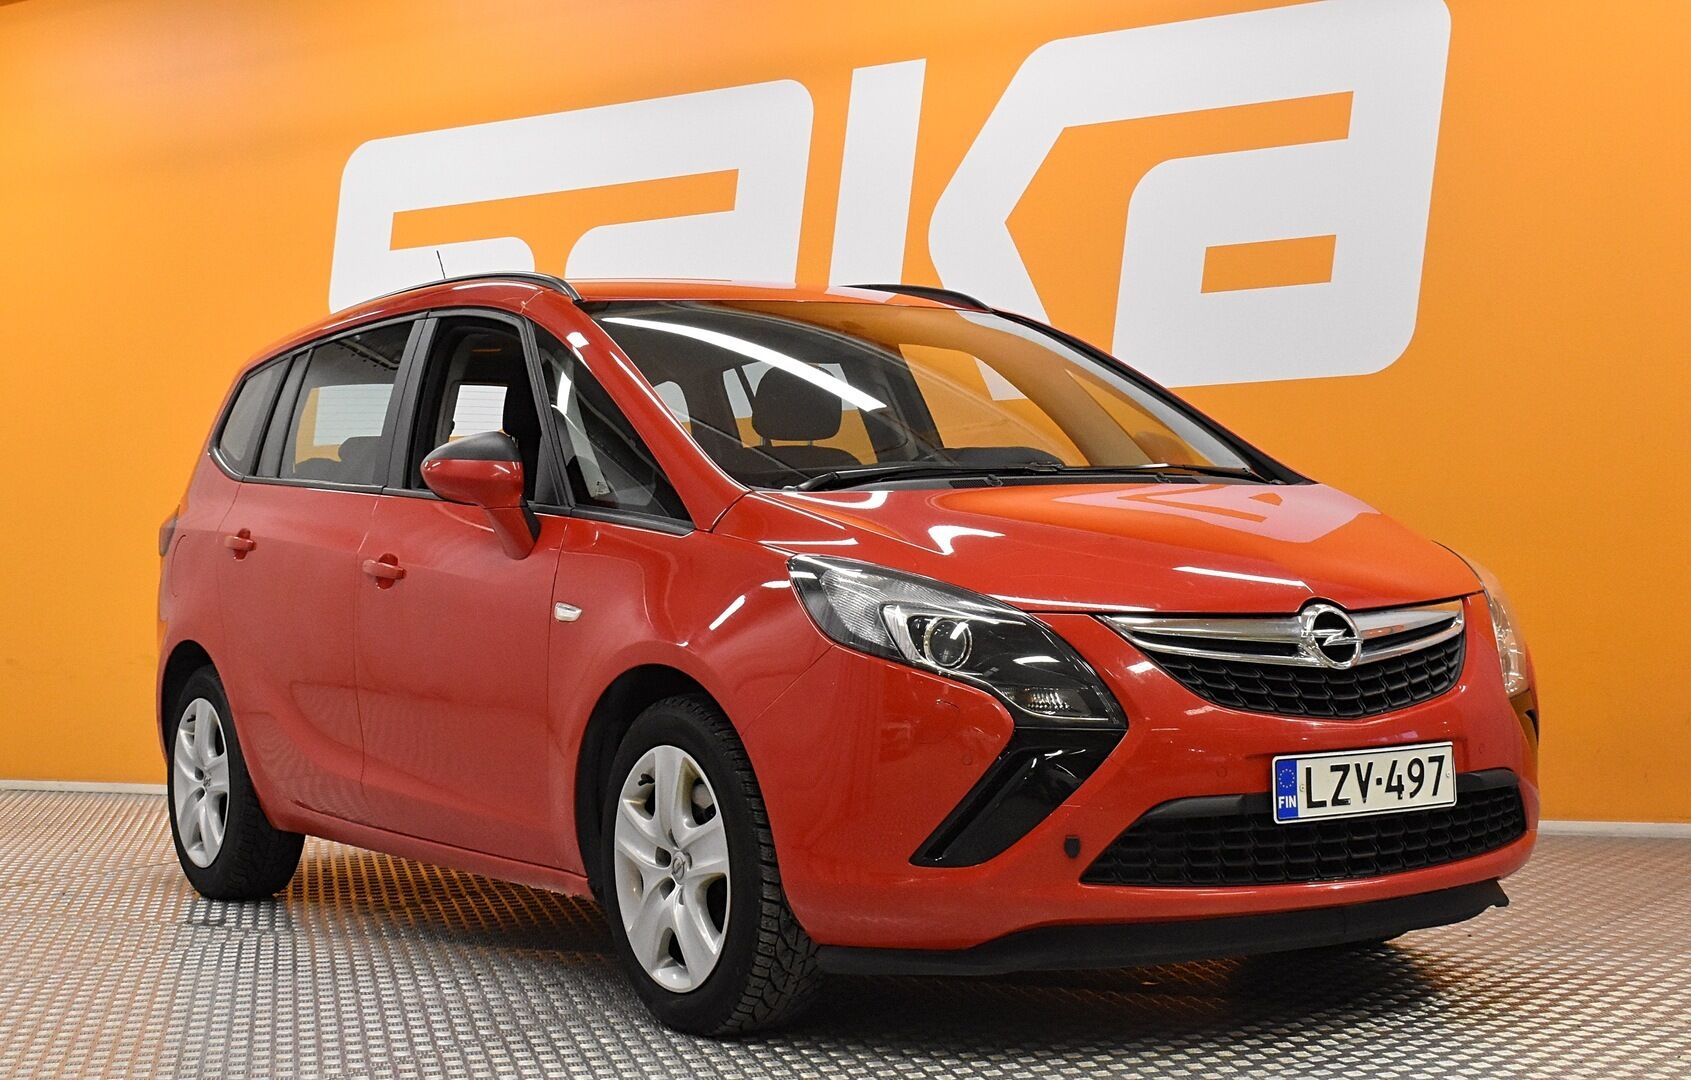 Punainen Tila-auto, Opel Zafira Tourer – LZV-497